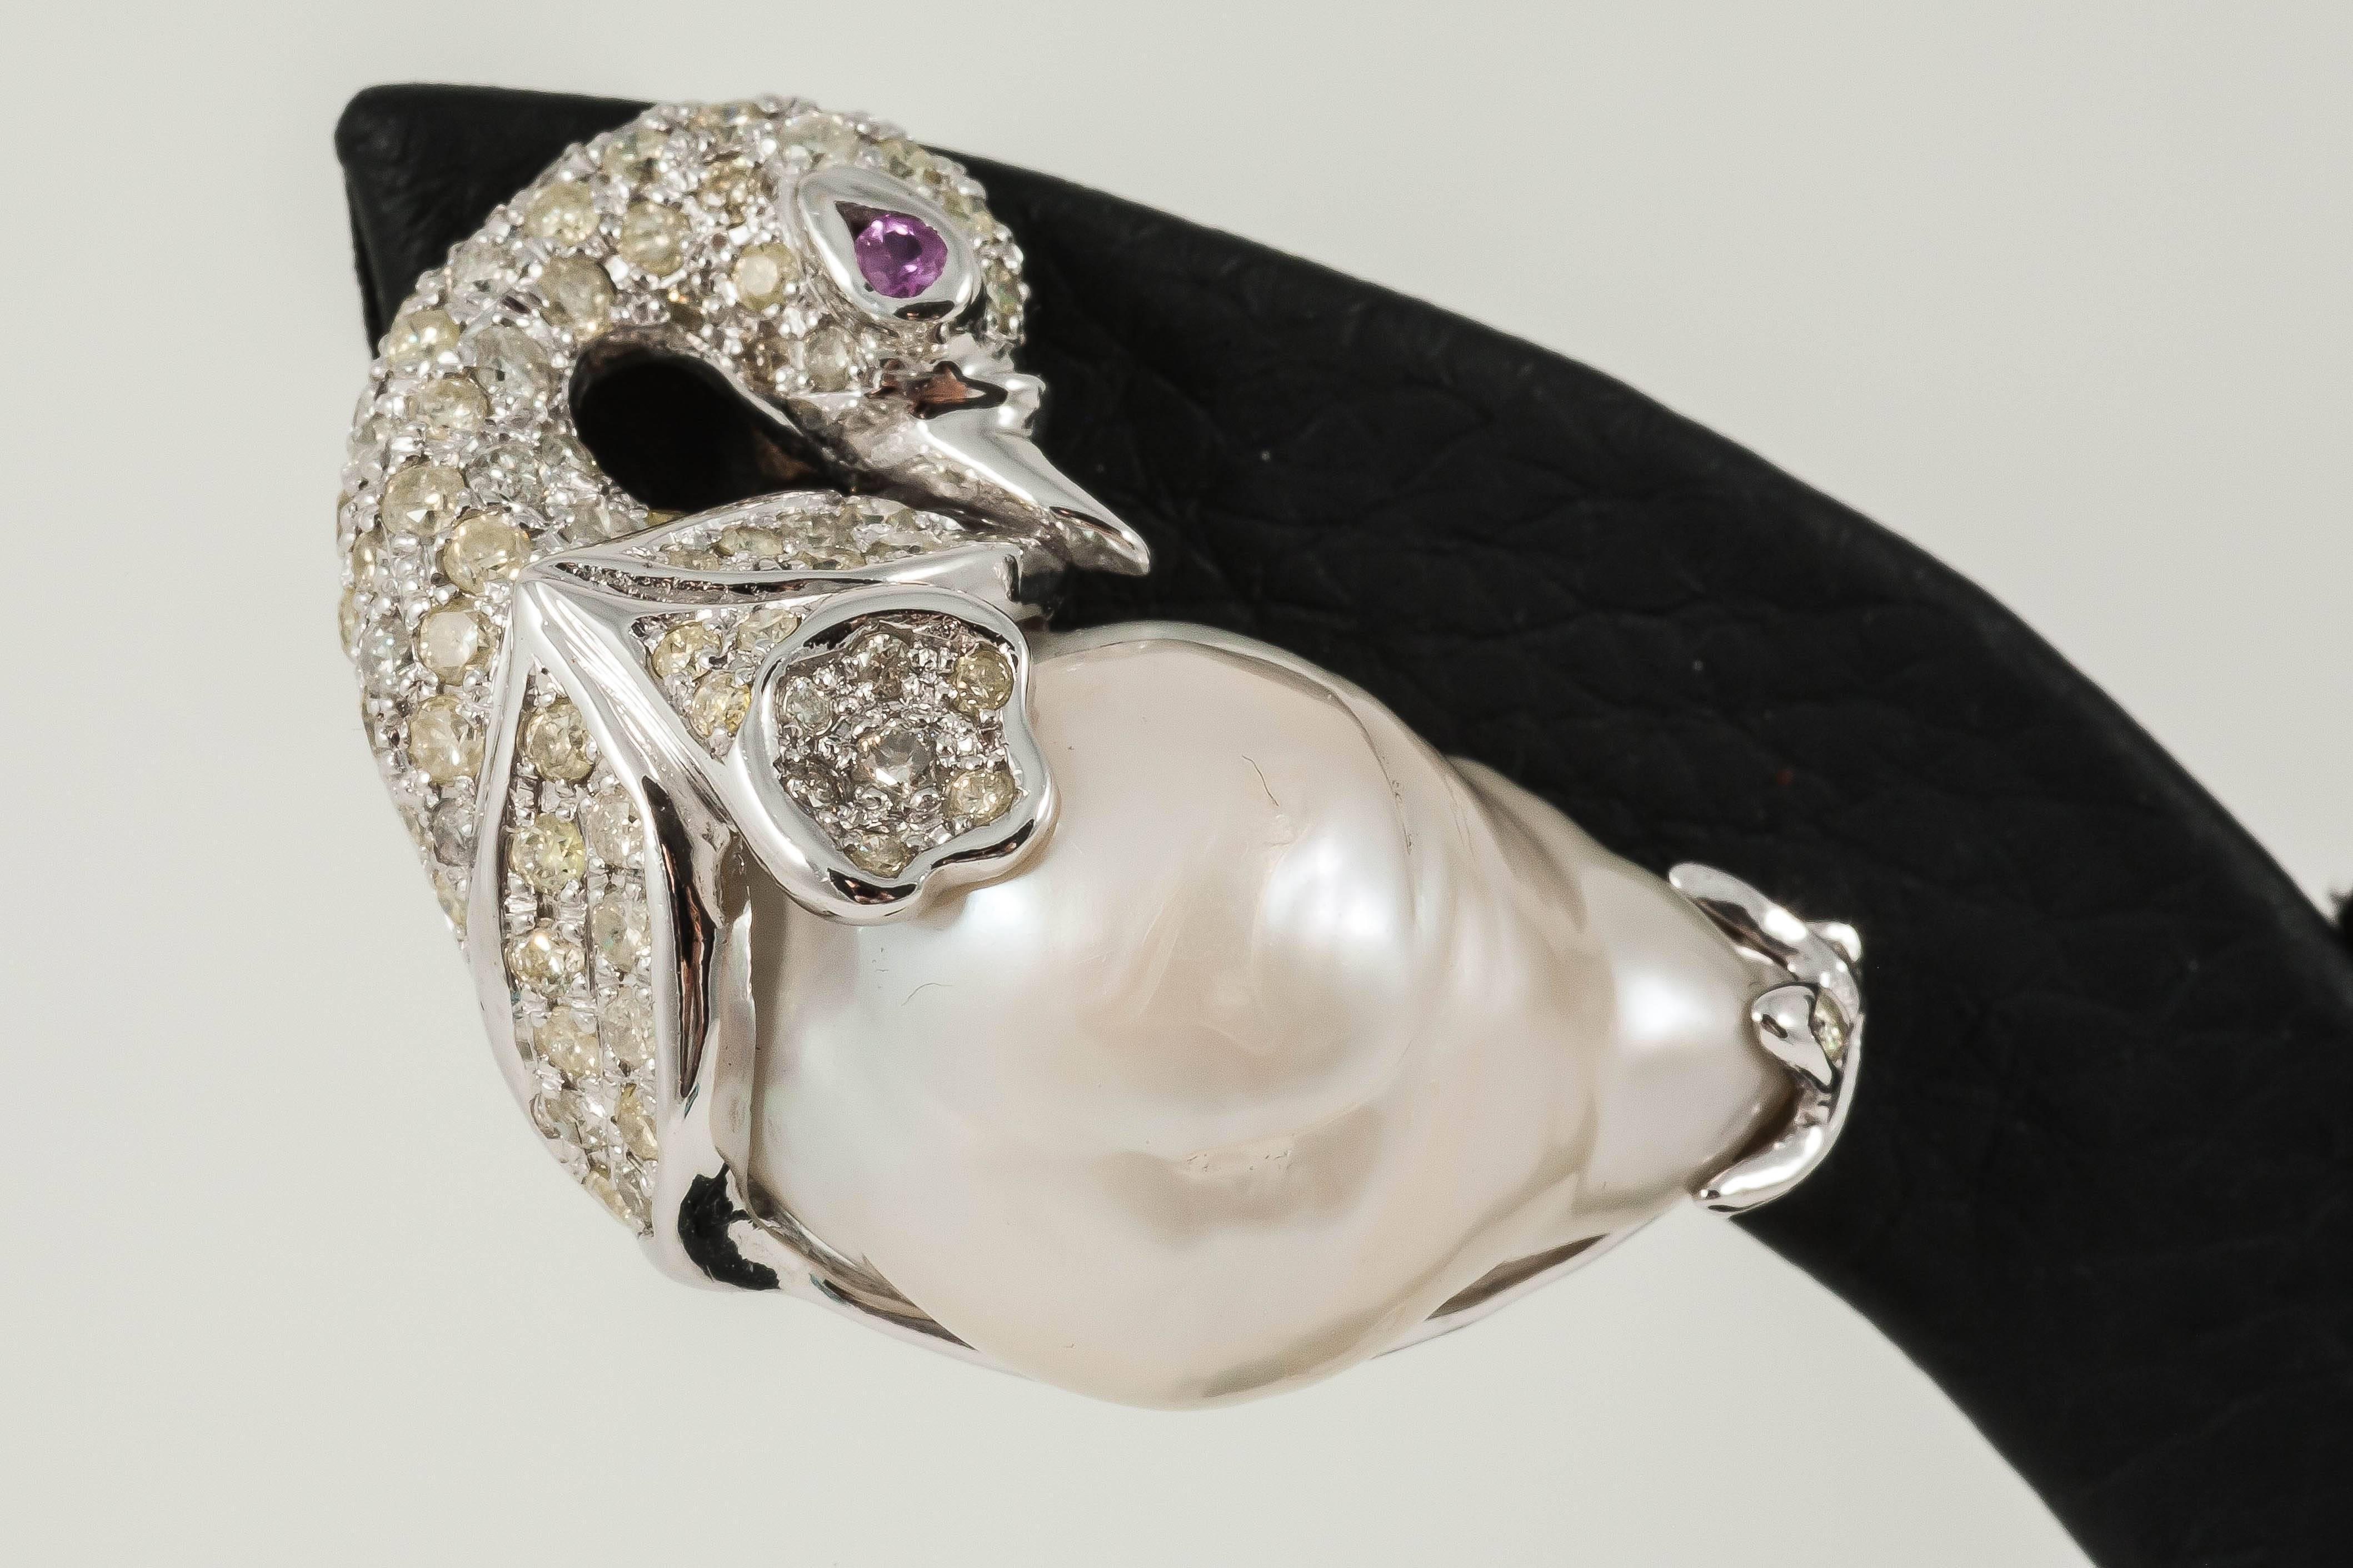 Diamond Swan studs

18K White Gold: 17.8gms
Diamond: 2.18cts
Baroque Pearl